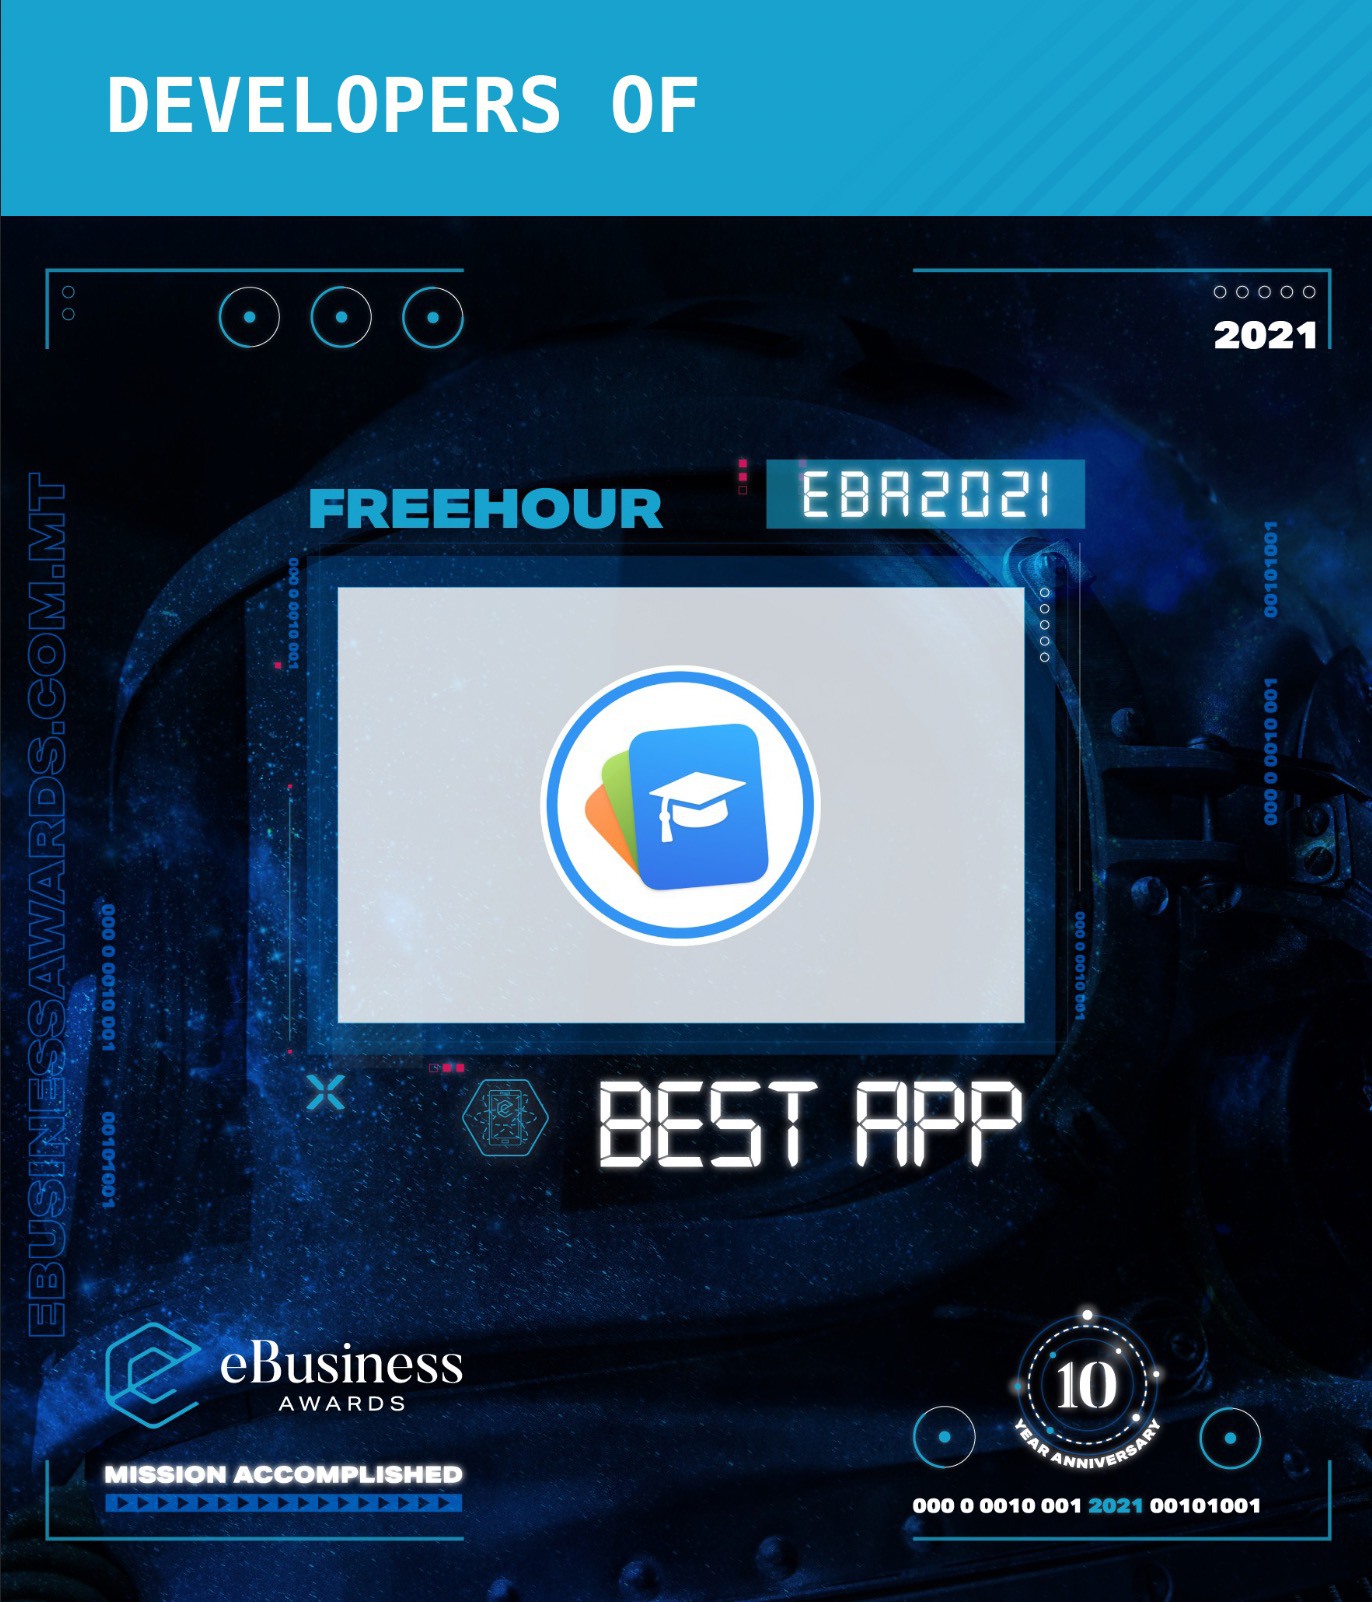 Best app freehour